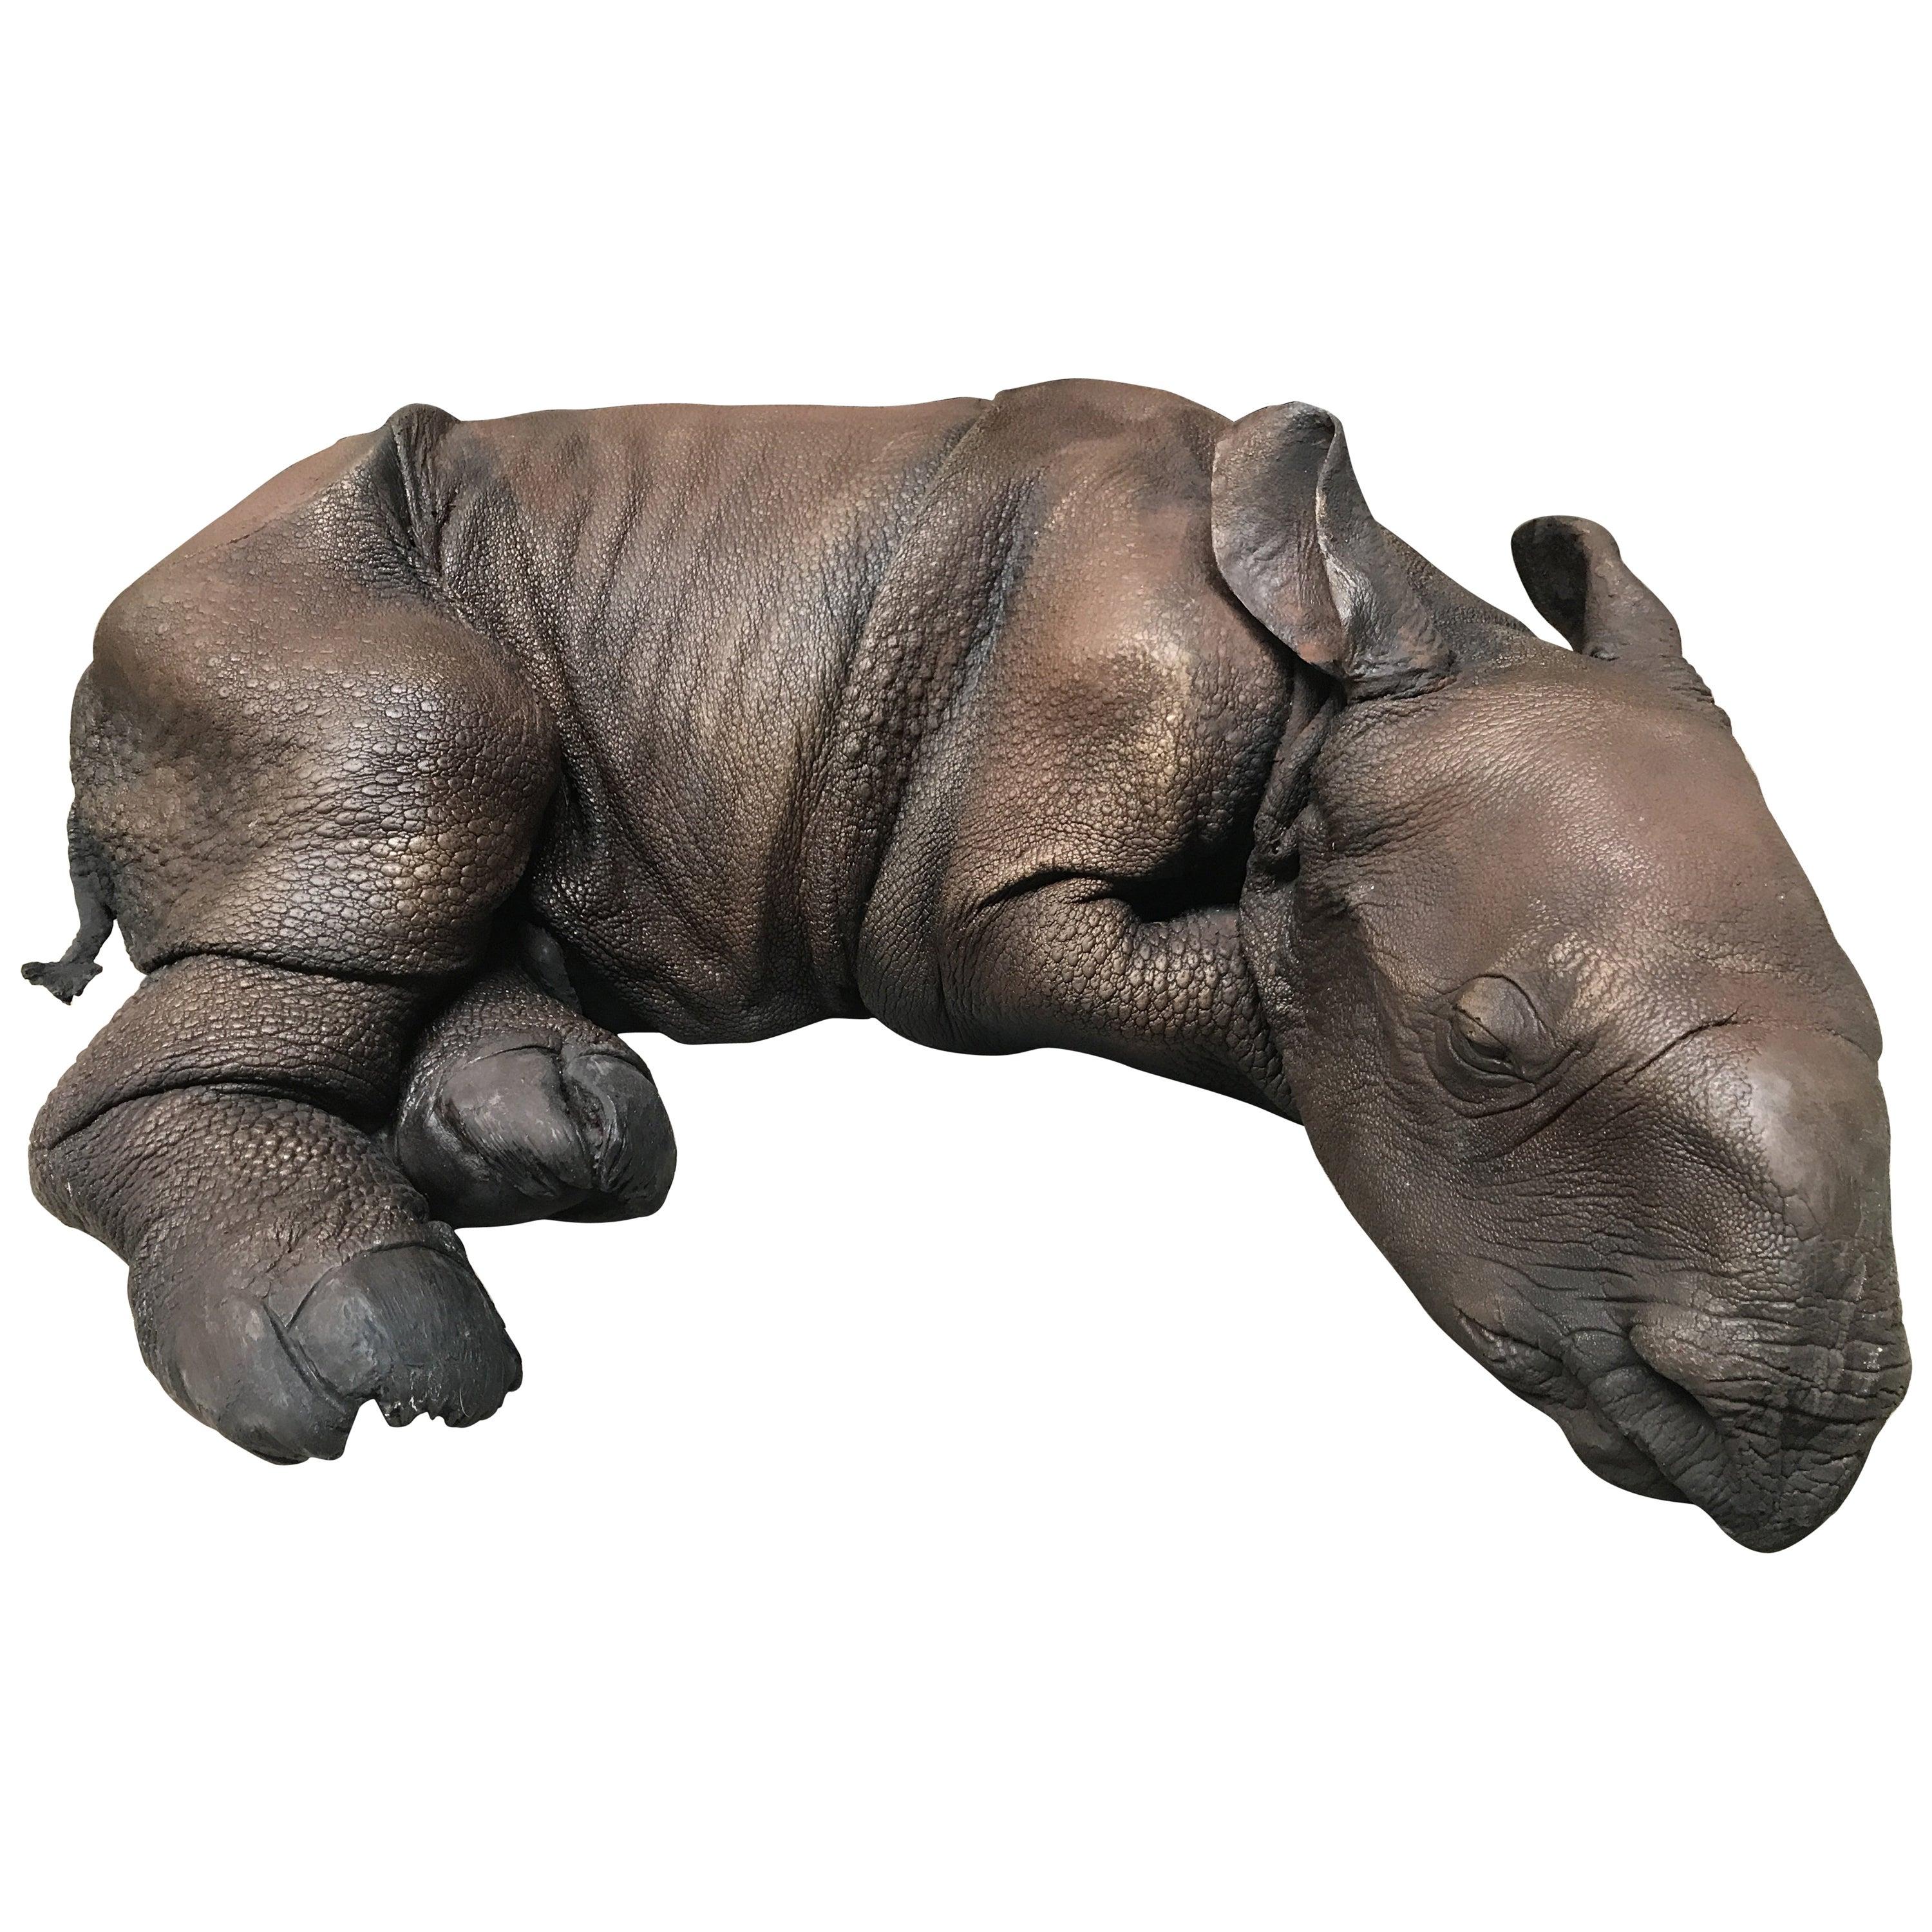 Lifelike Replica of a Rhino Calf